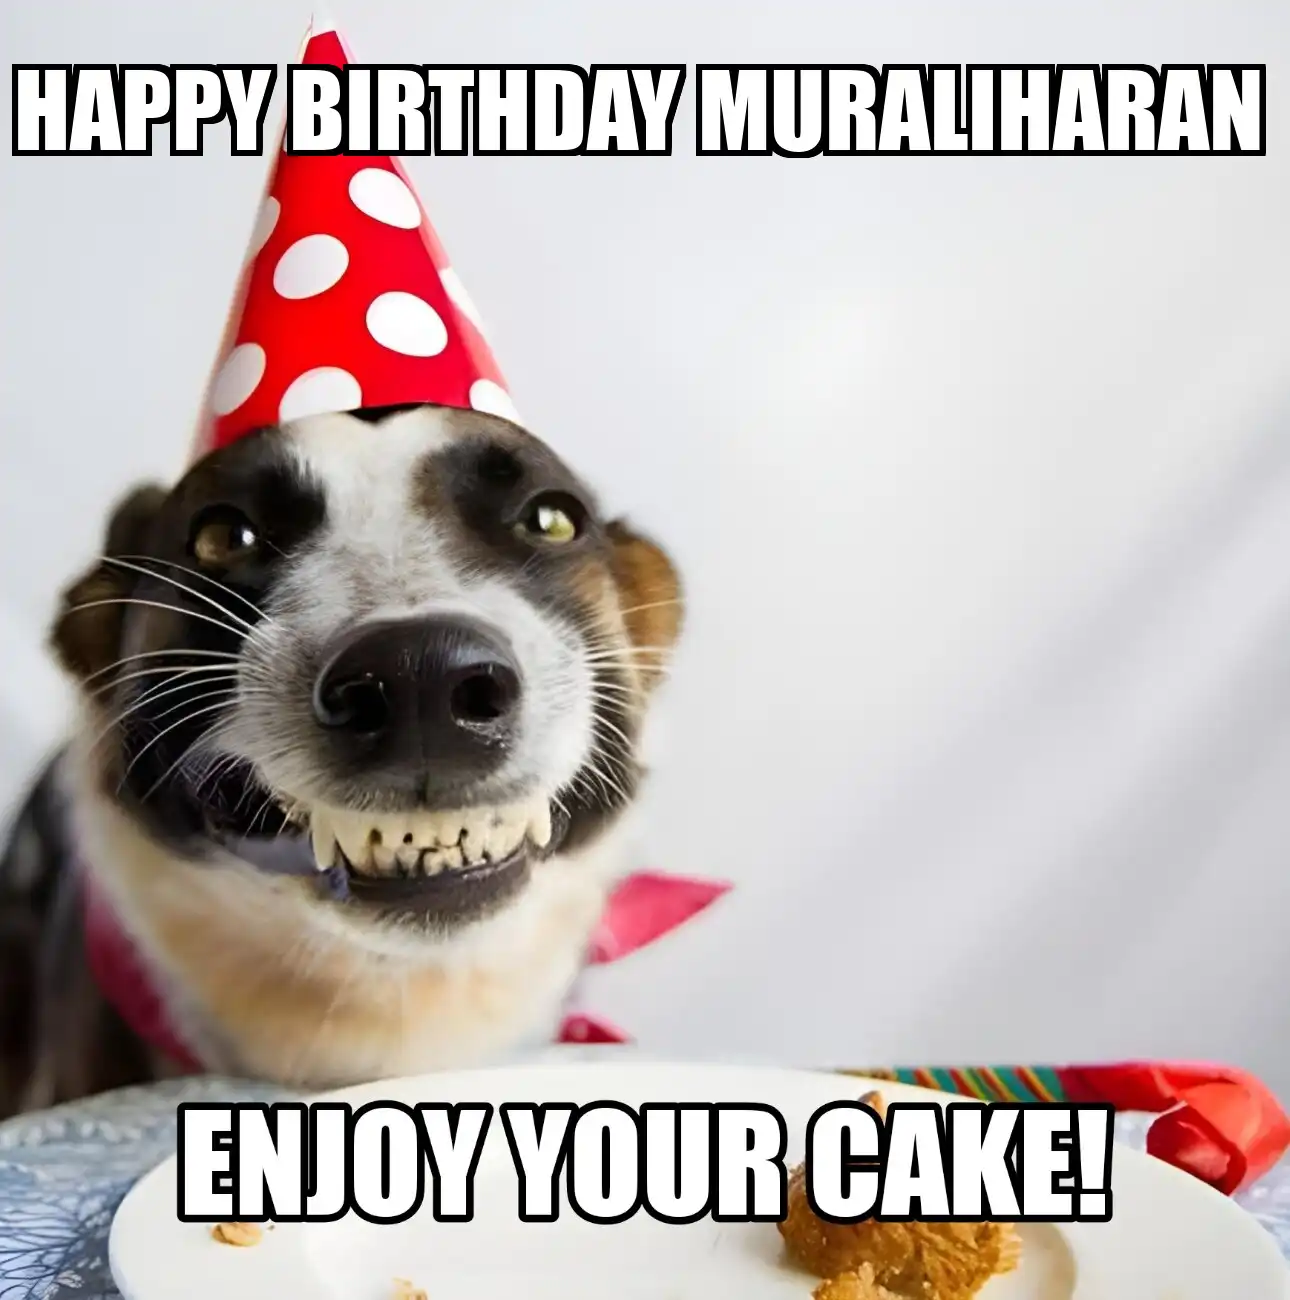 Happy Birthday Muraliharan Enjoy Your Cake Dog Meme